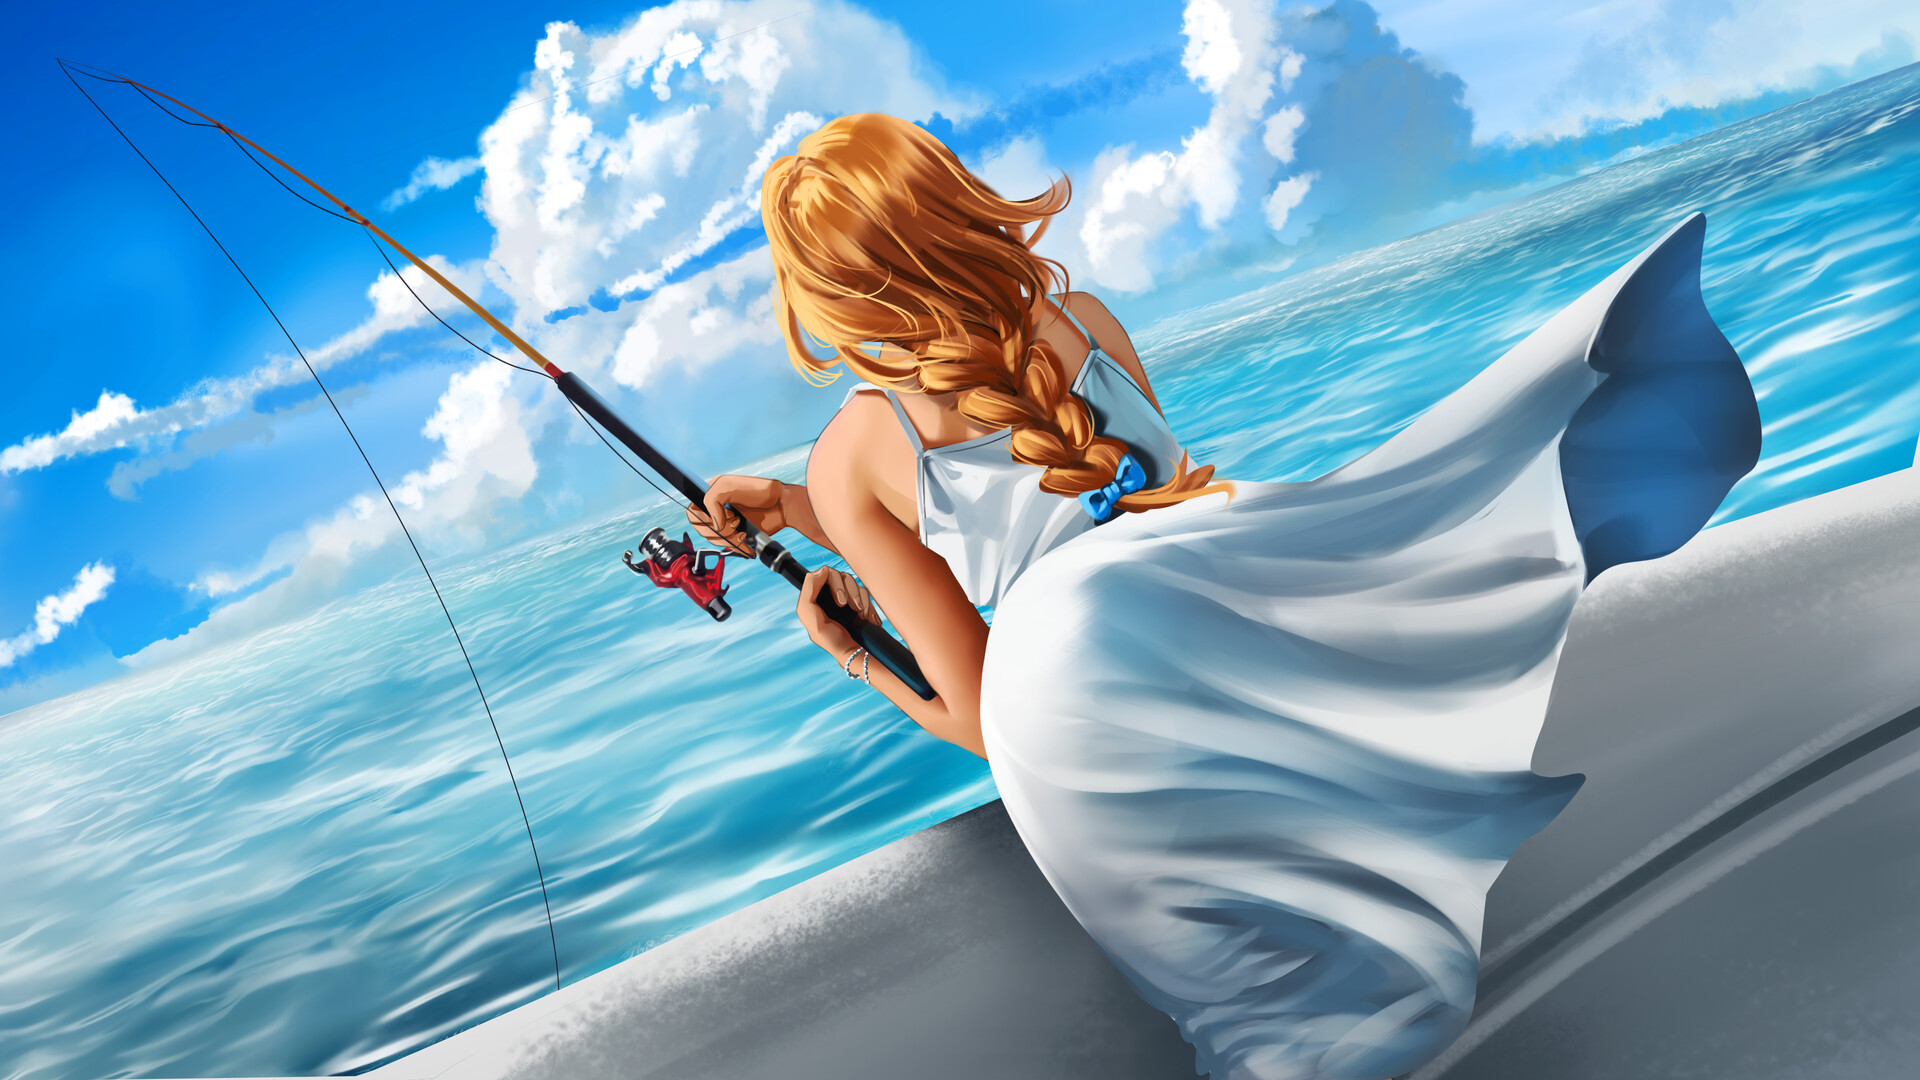 Fishing And Girls Steam CD Key